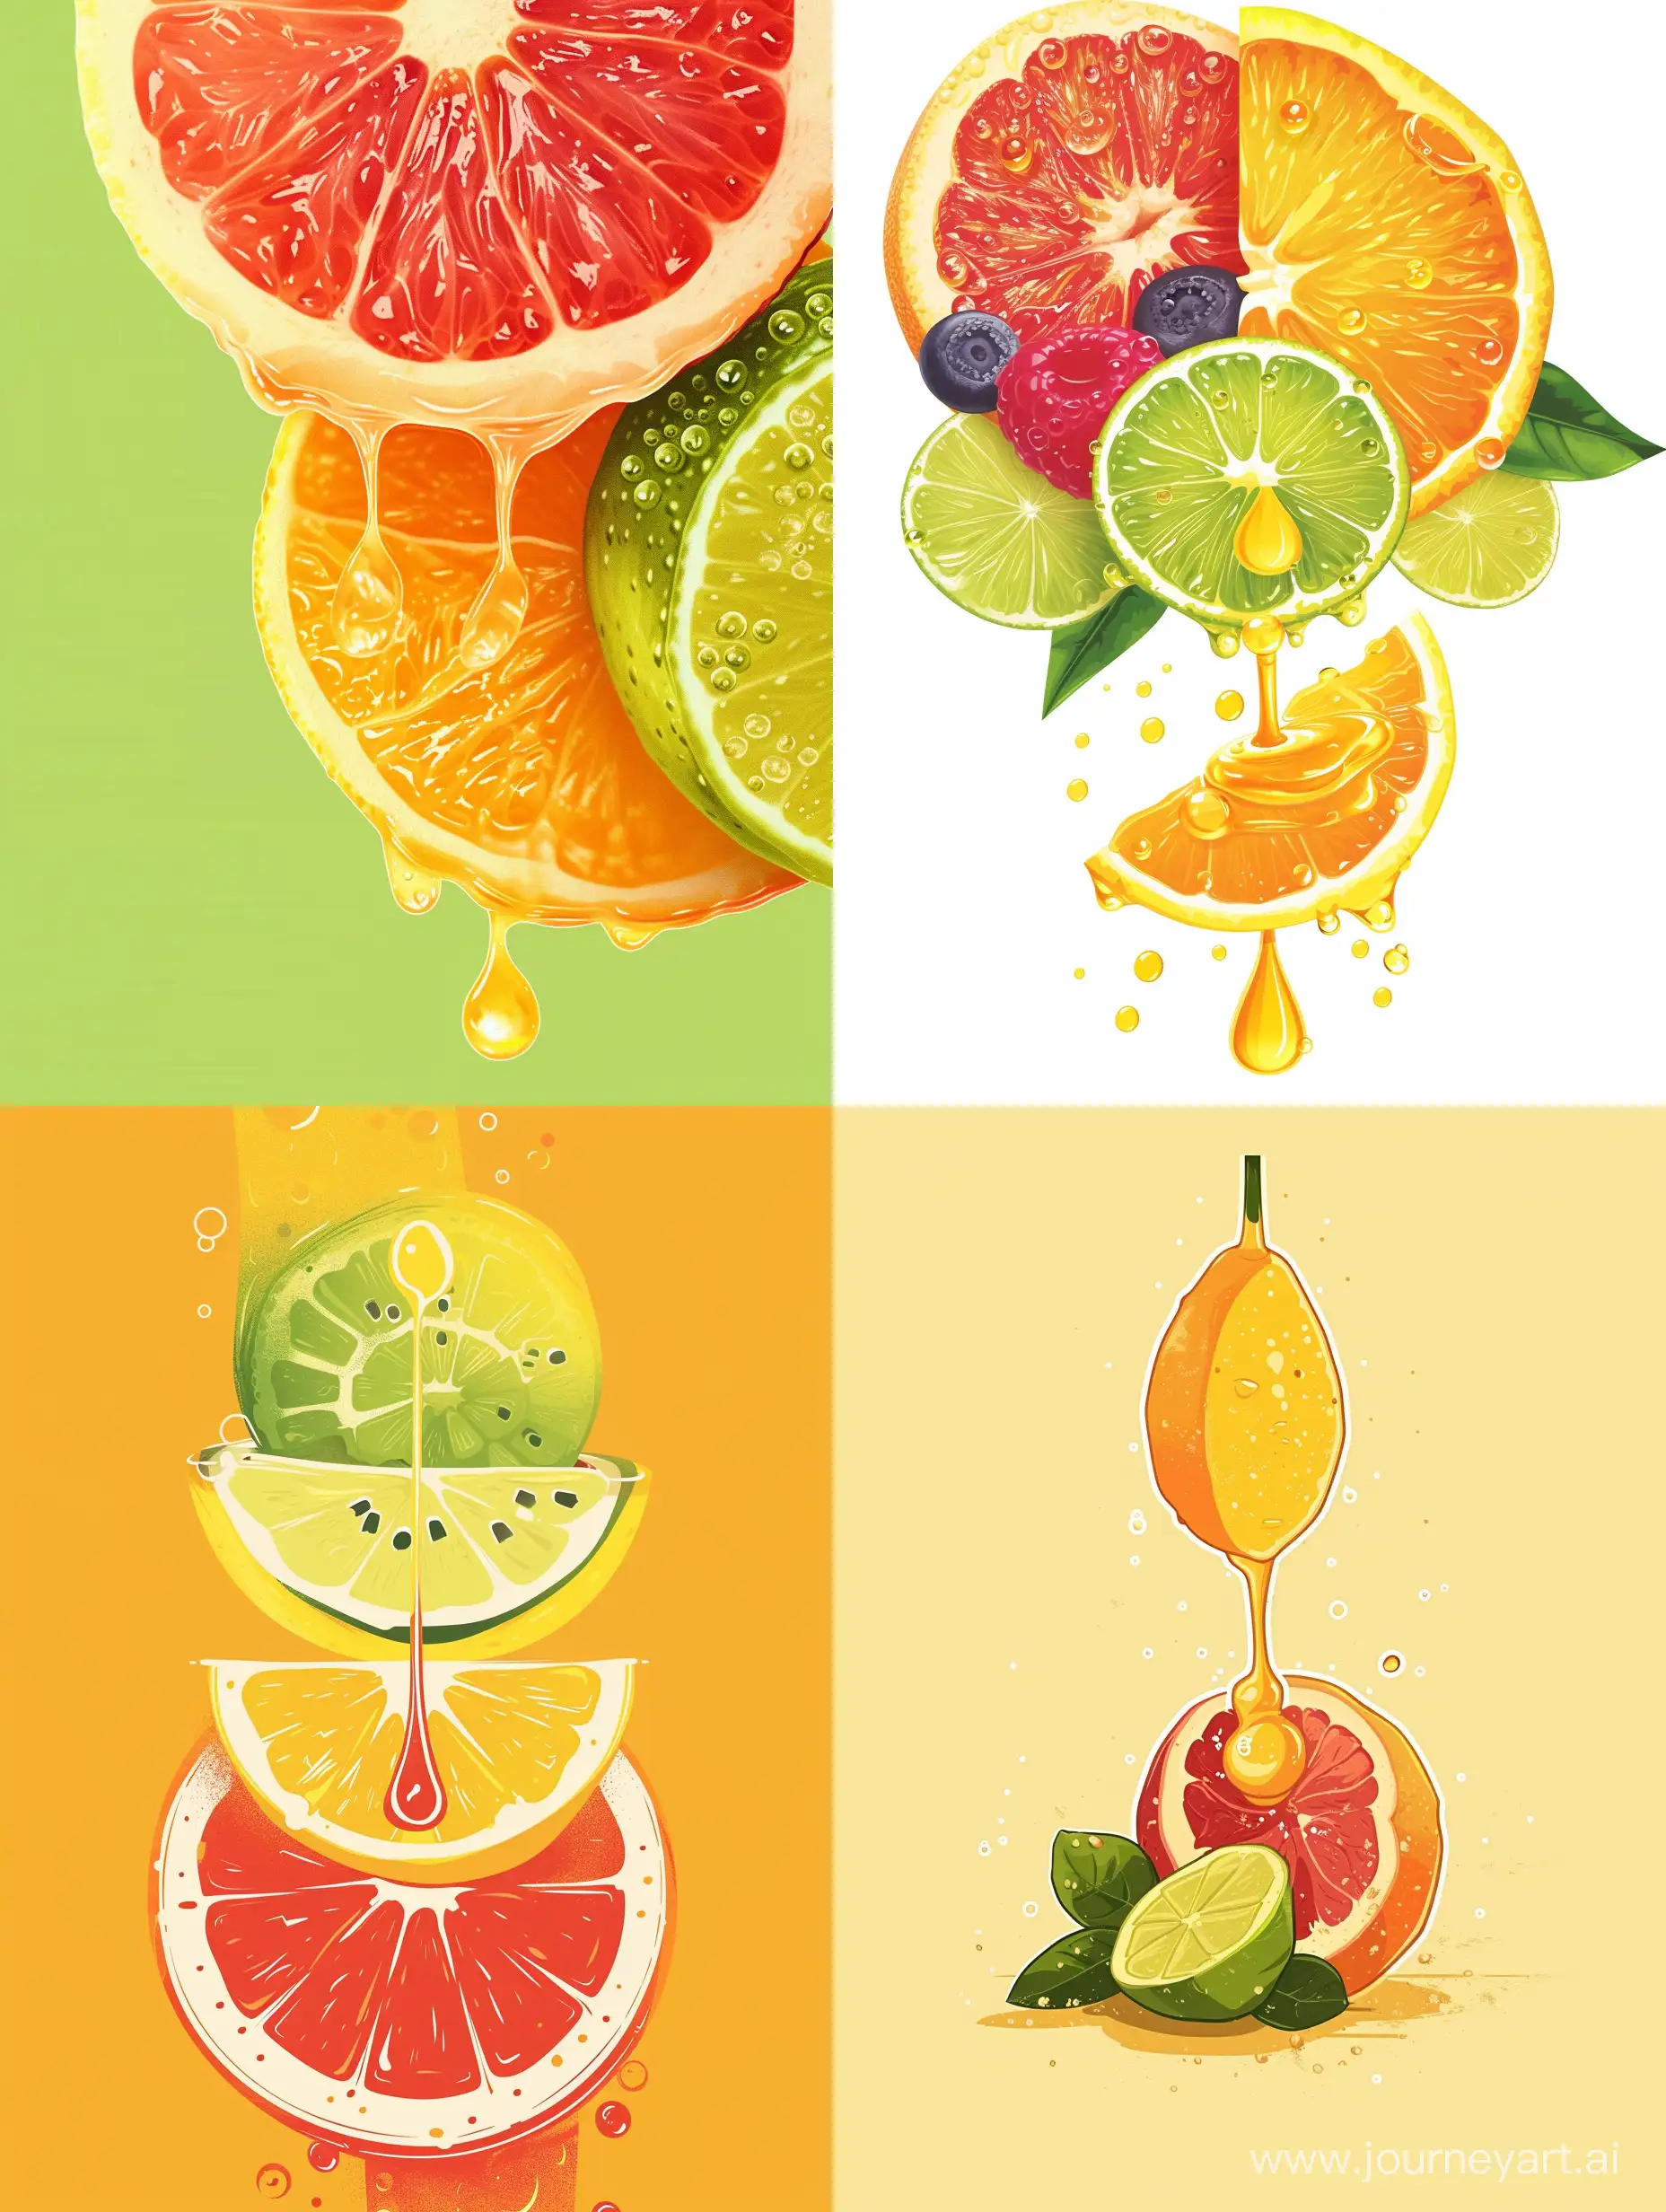 AquaFresh-Vibrant-Natural-Beverage-Production-with-Juicy-Fruit-Logo